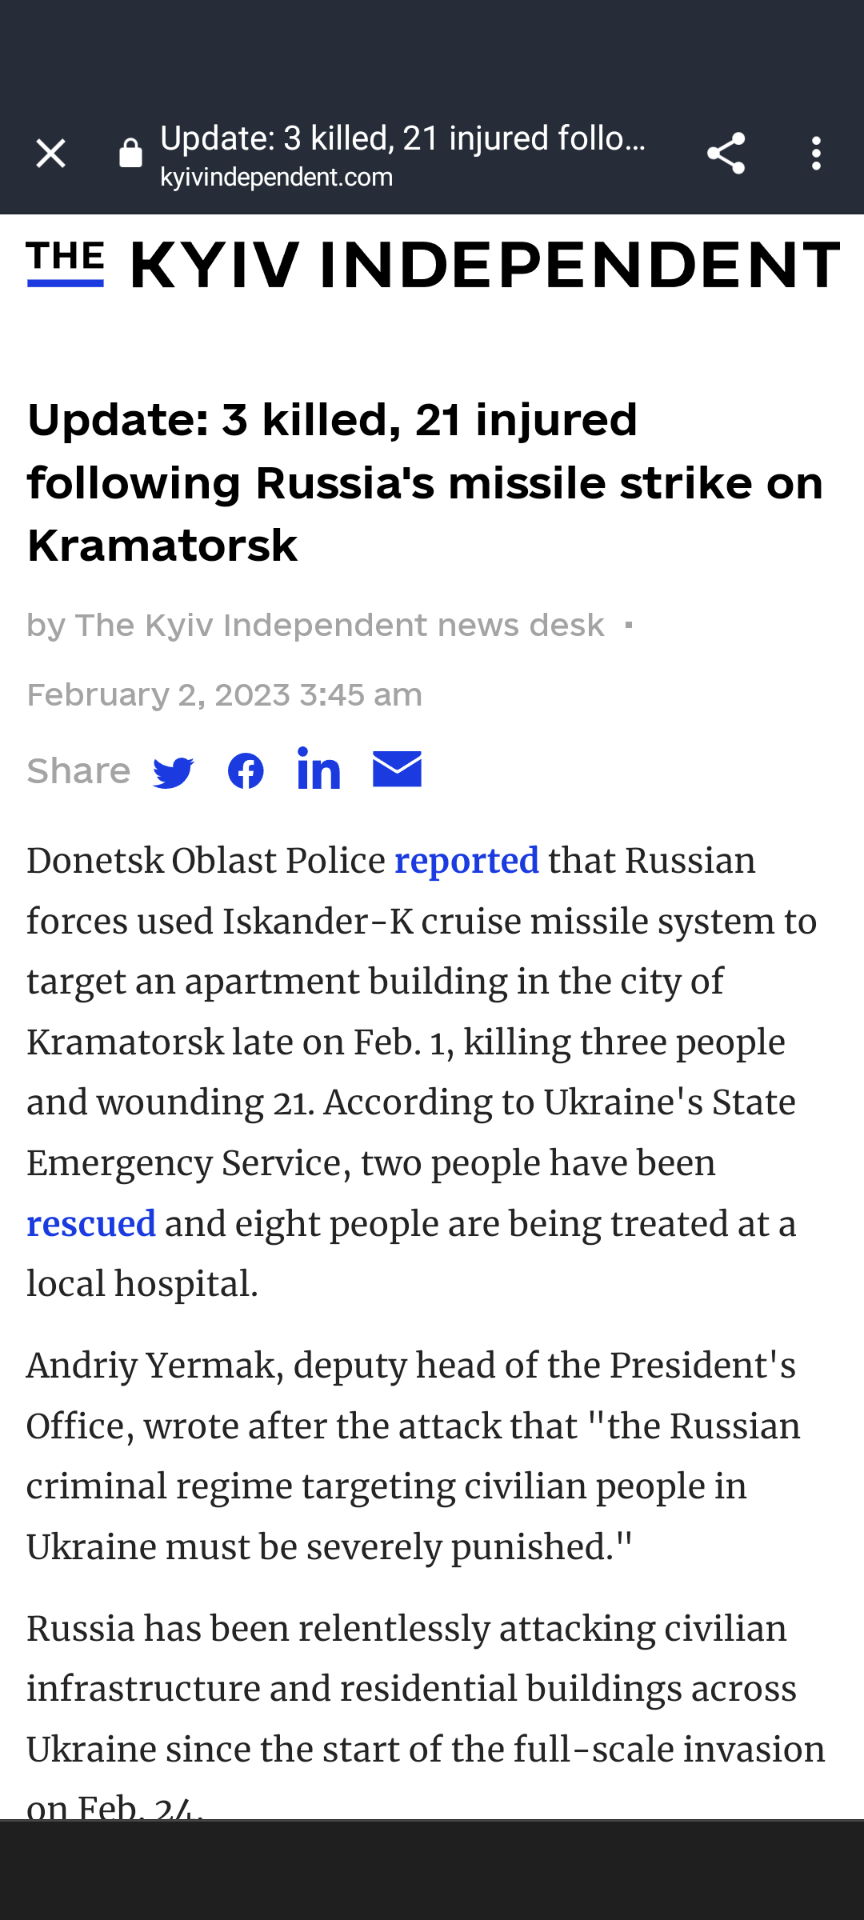 Change: 3 killed, 21 injured following Russia’s missile strike on Kramatorsk.